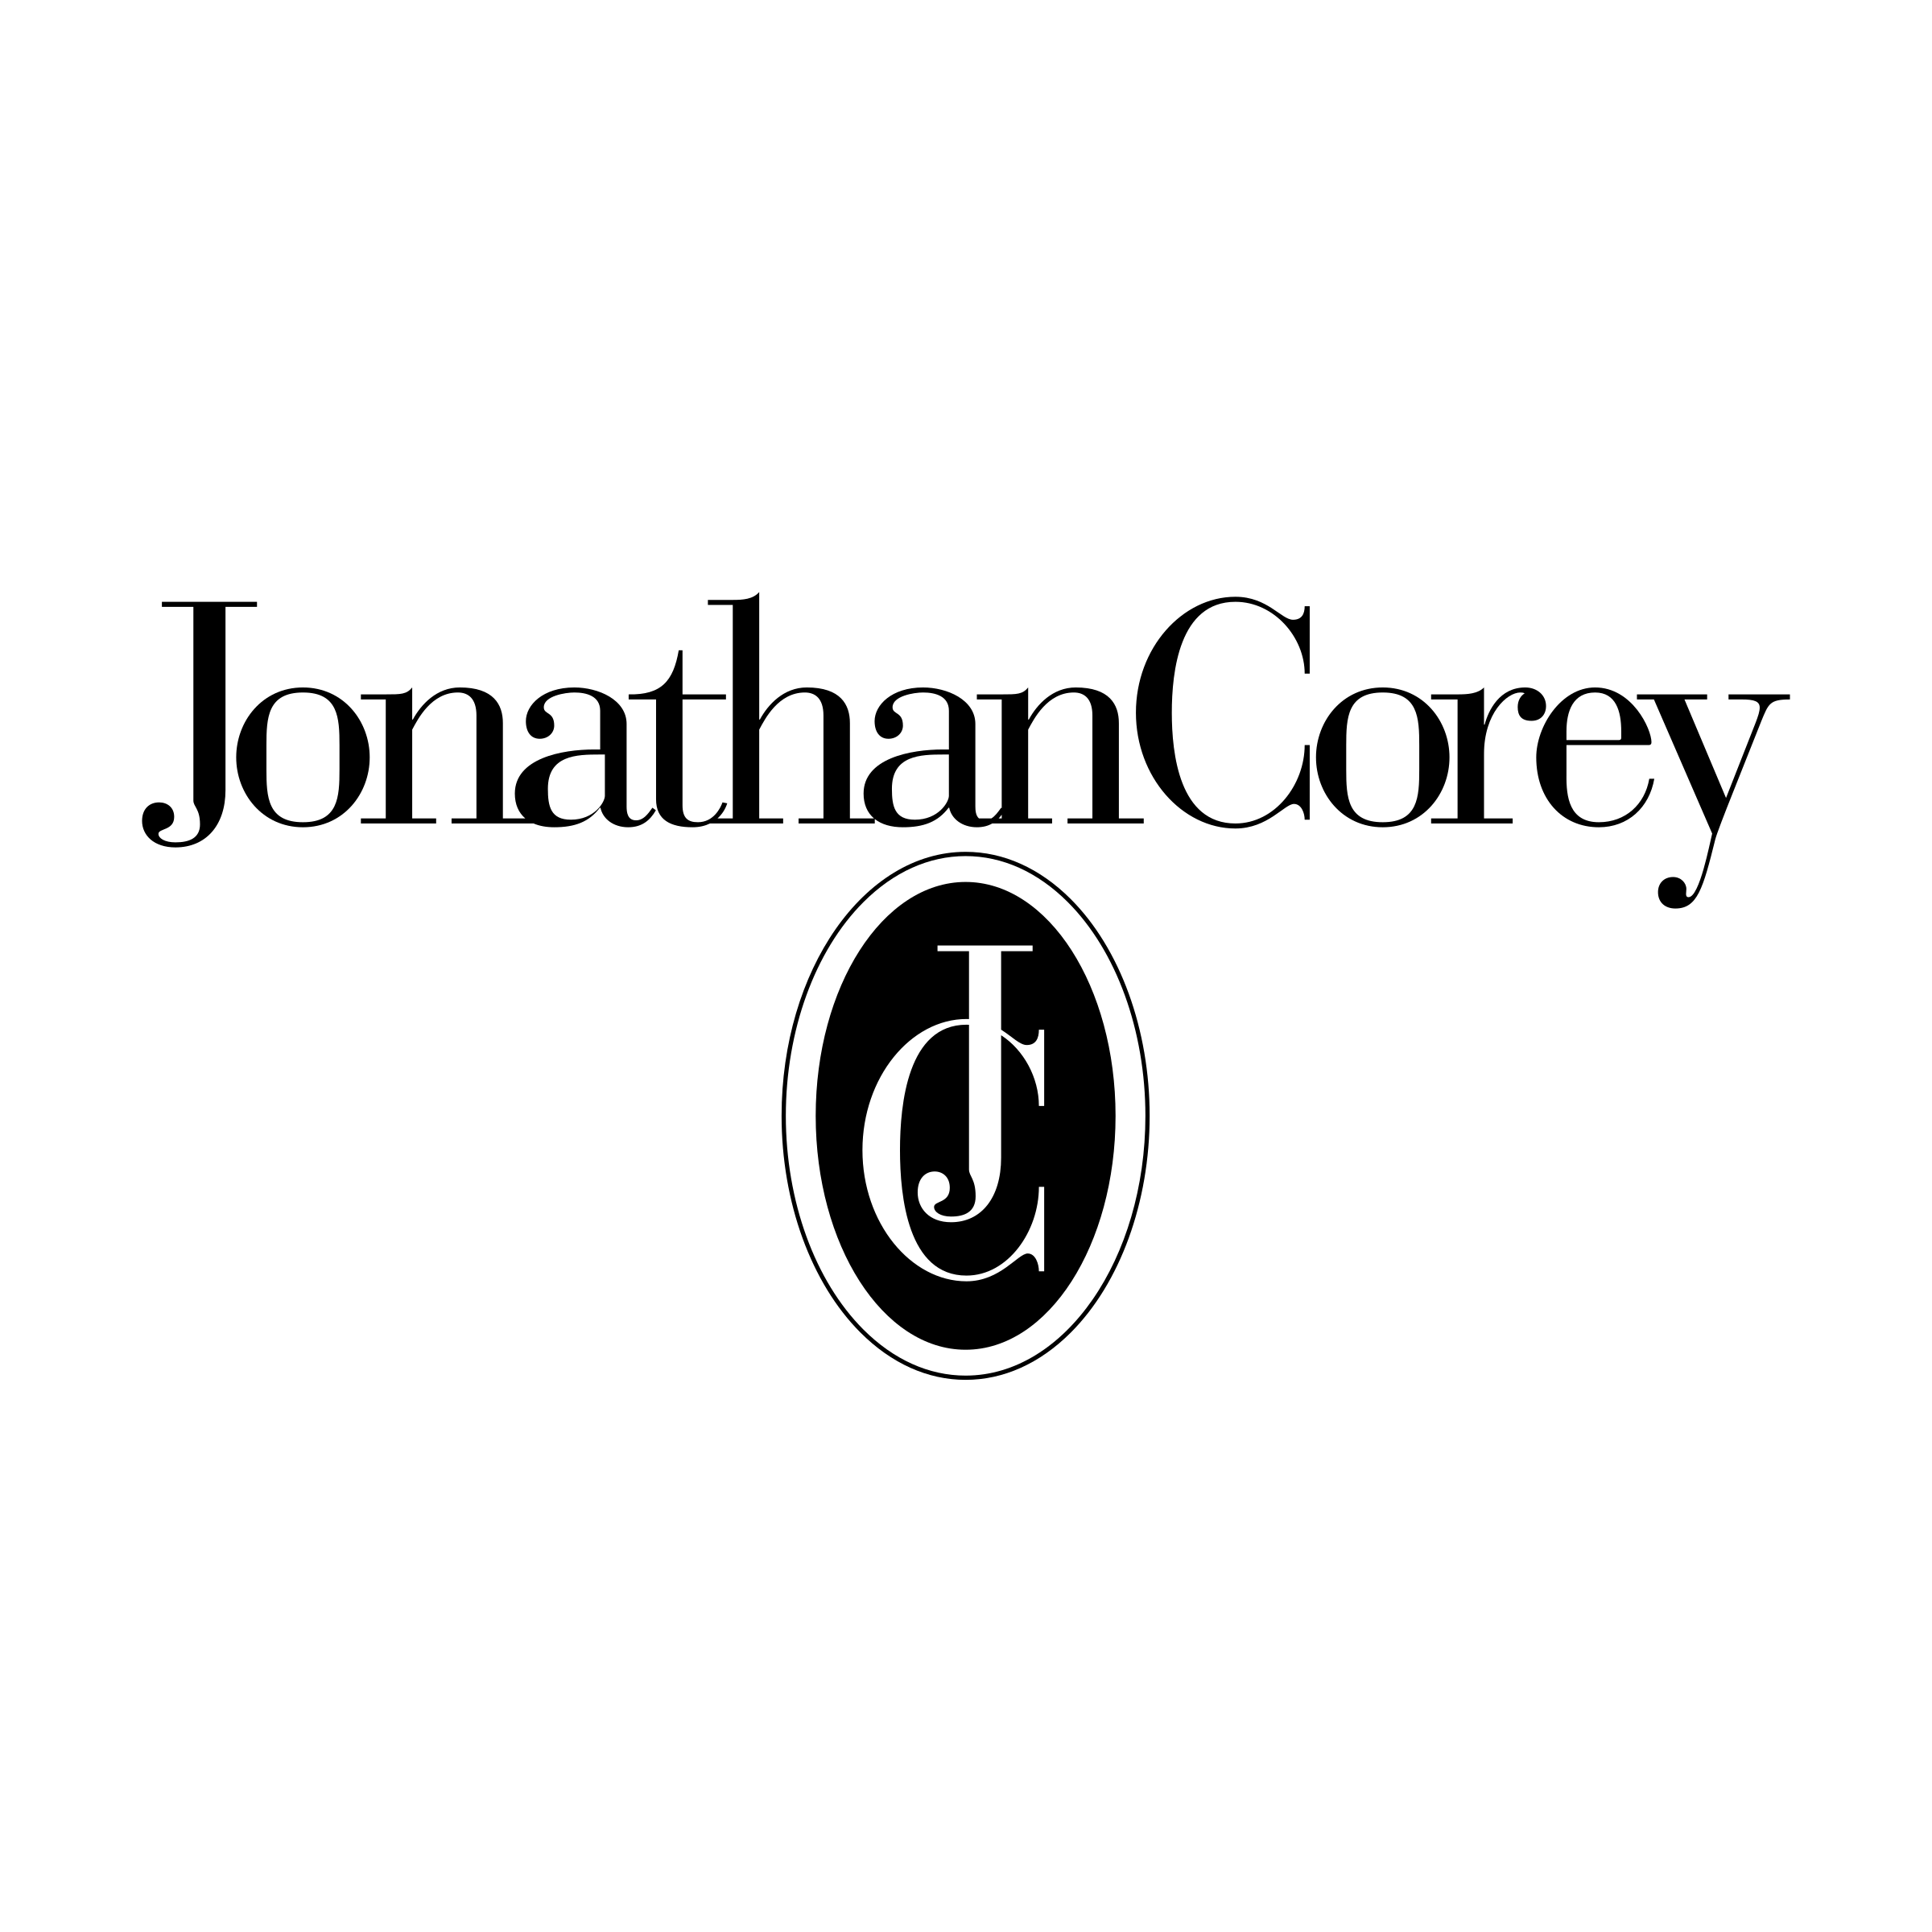 Corey Logo - Jonathan Corey Logo PNG Transparent & SVG Vector - Freebie Supply